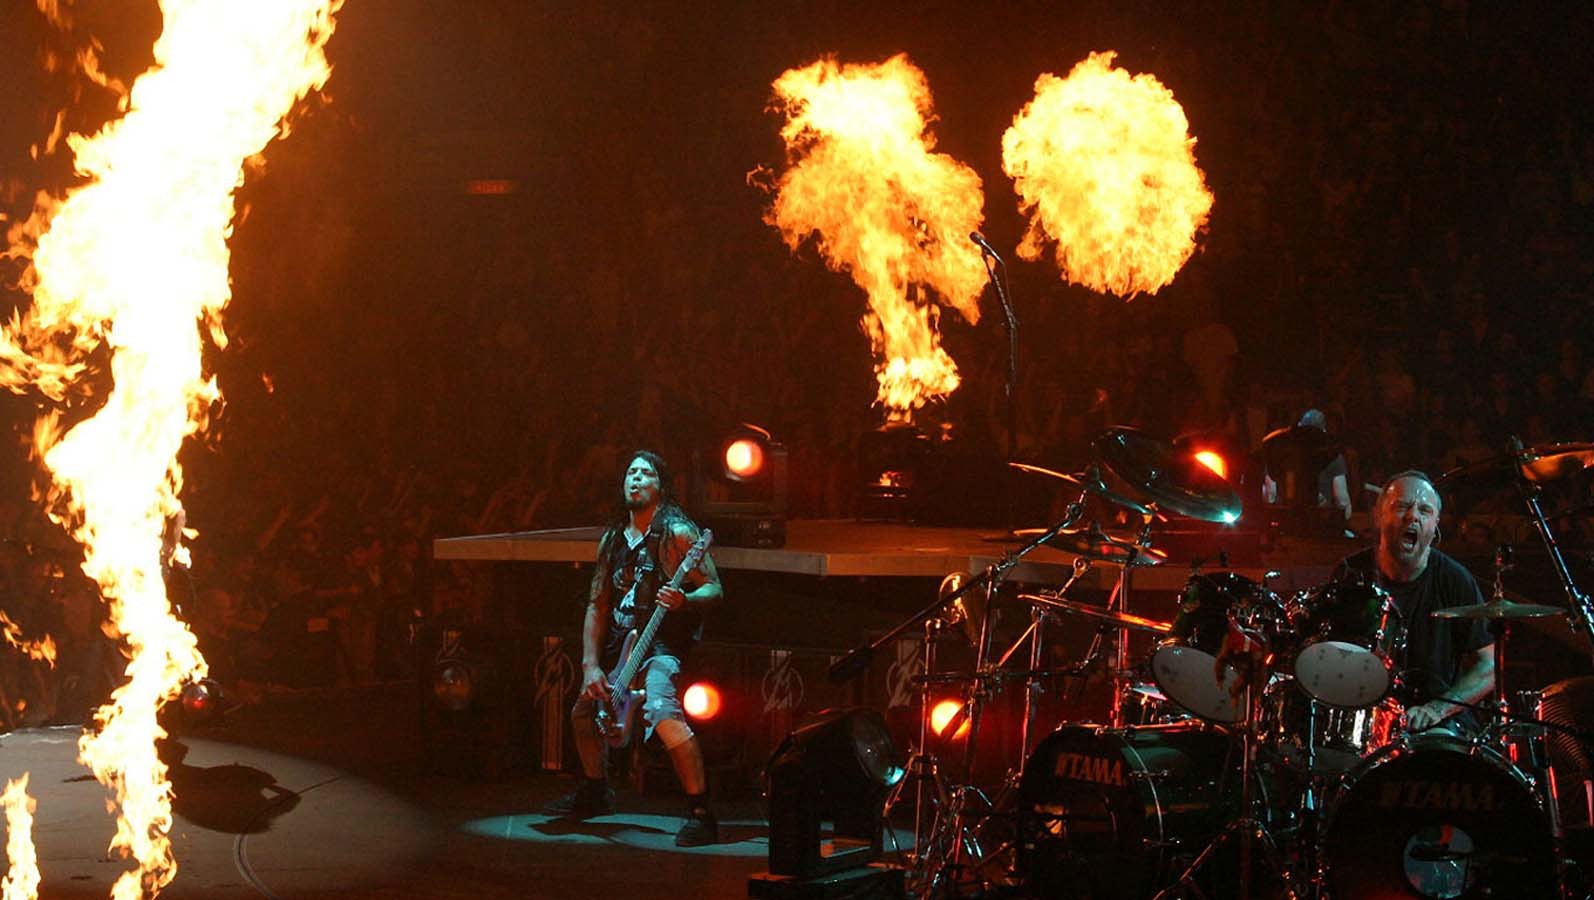 People 1594x900 Big 4 pyrotechnics heavy metal bass guitars guitarist drummer concerts men music band fire Lars Ulrich Robert Trujillo Metallica